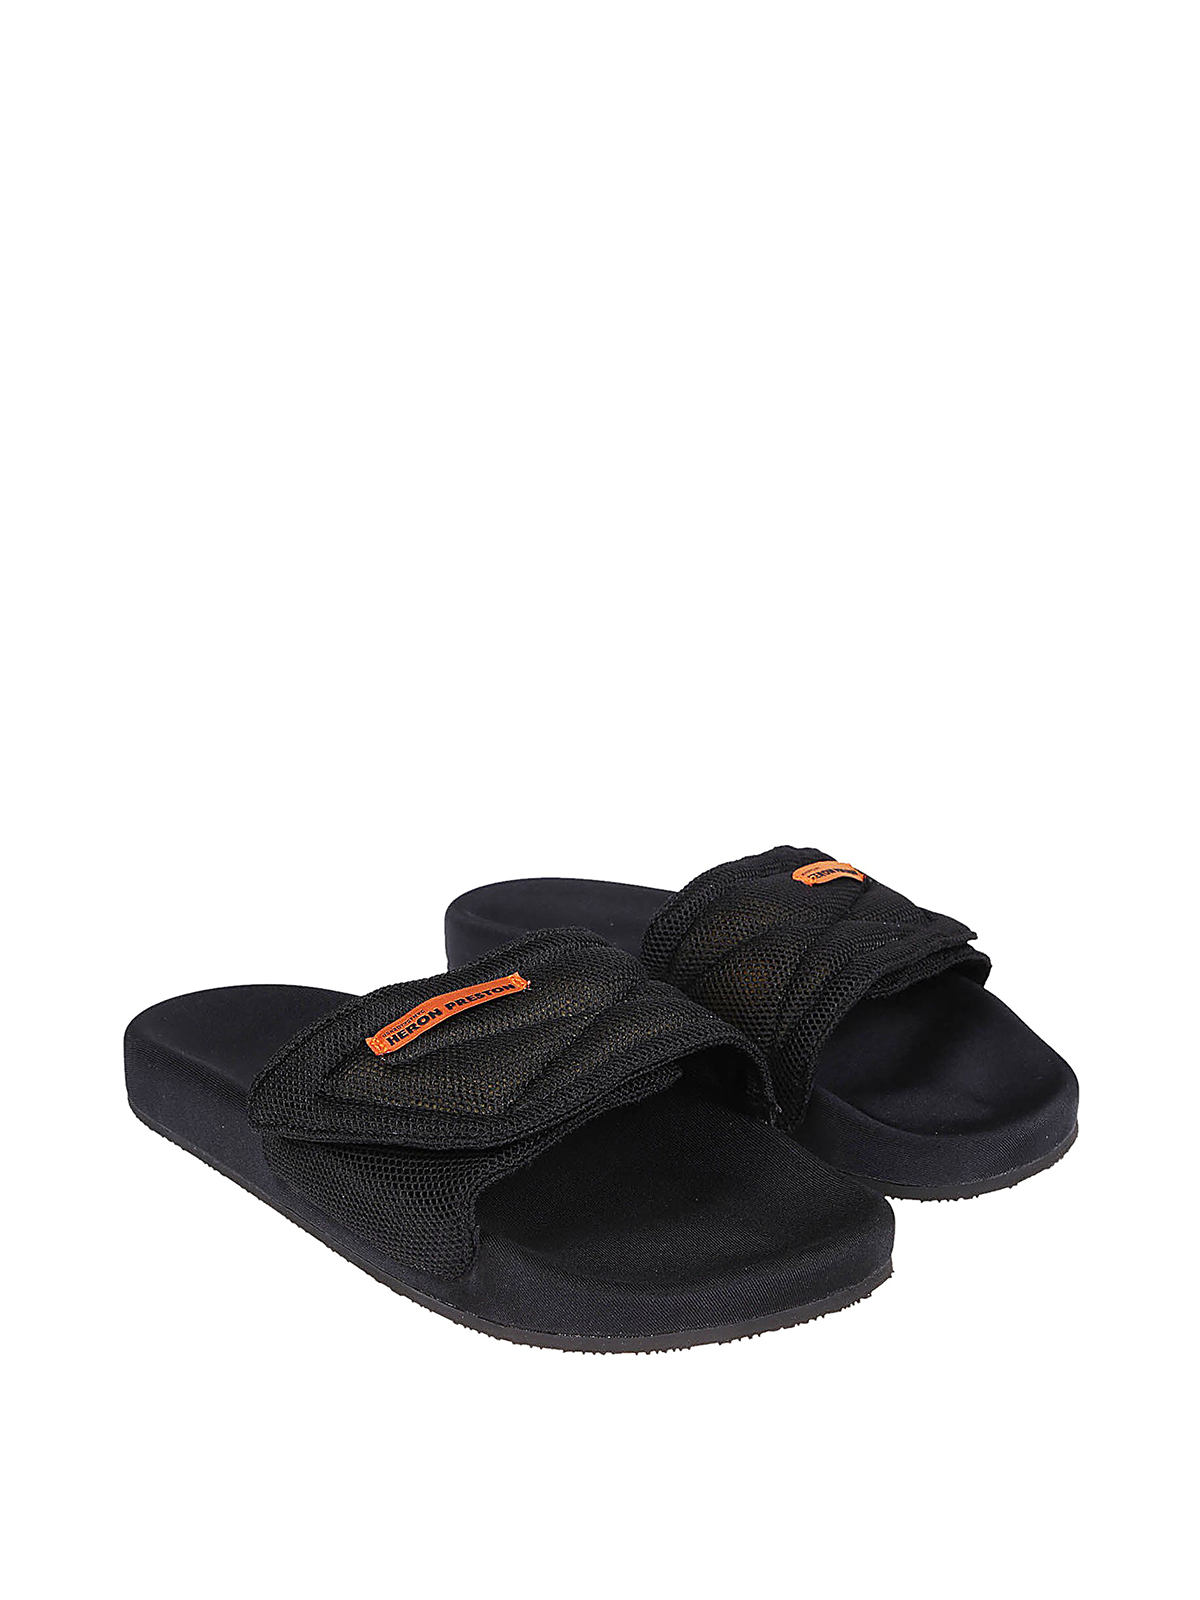 Heron Preston - Black slide sandals - flip flops - HMIA014S209170781000